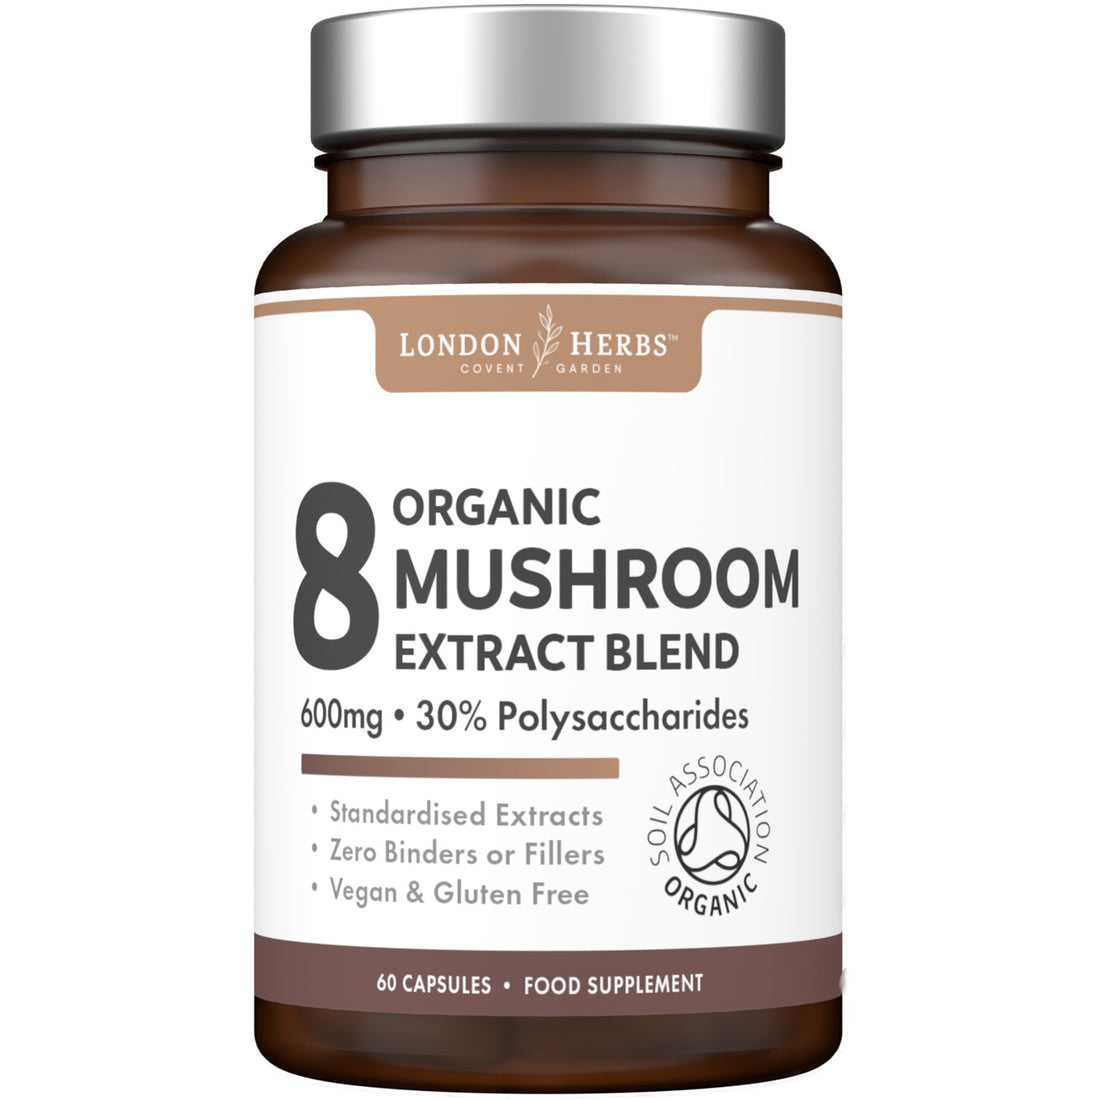 Organic 8 Mushroom Extract Blend